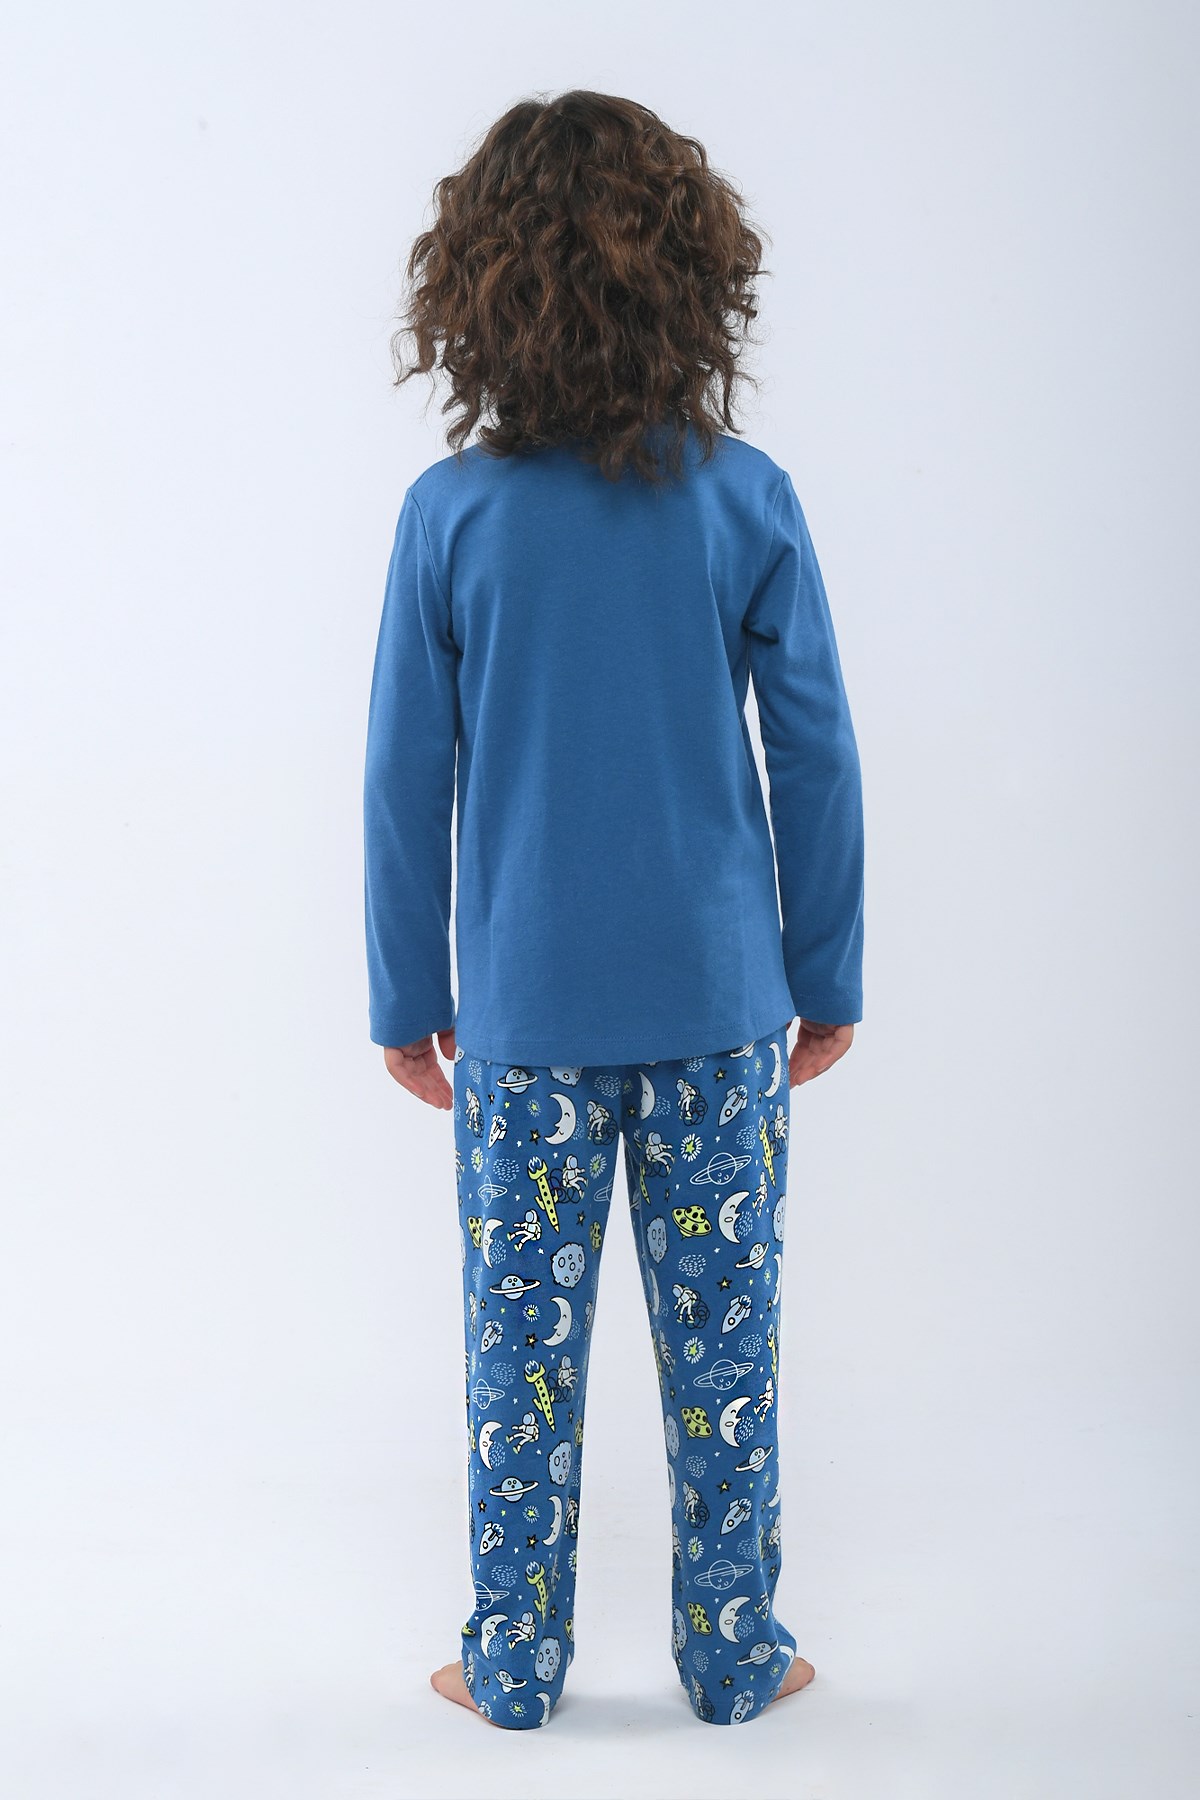 Katia and Bony Blue Space Erkek Çocuk Pijama Takımı MAVİ. 4